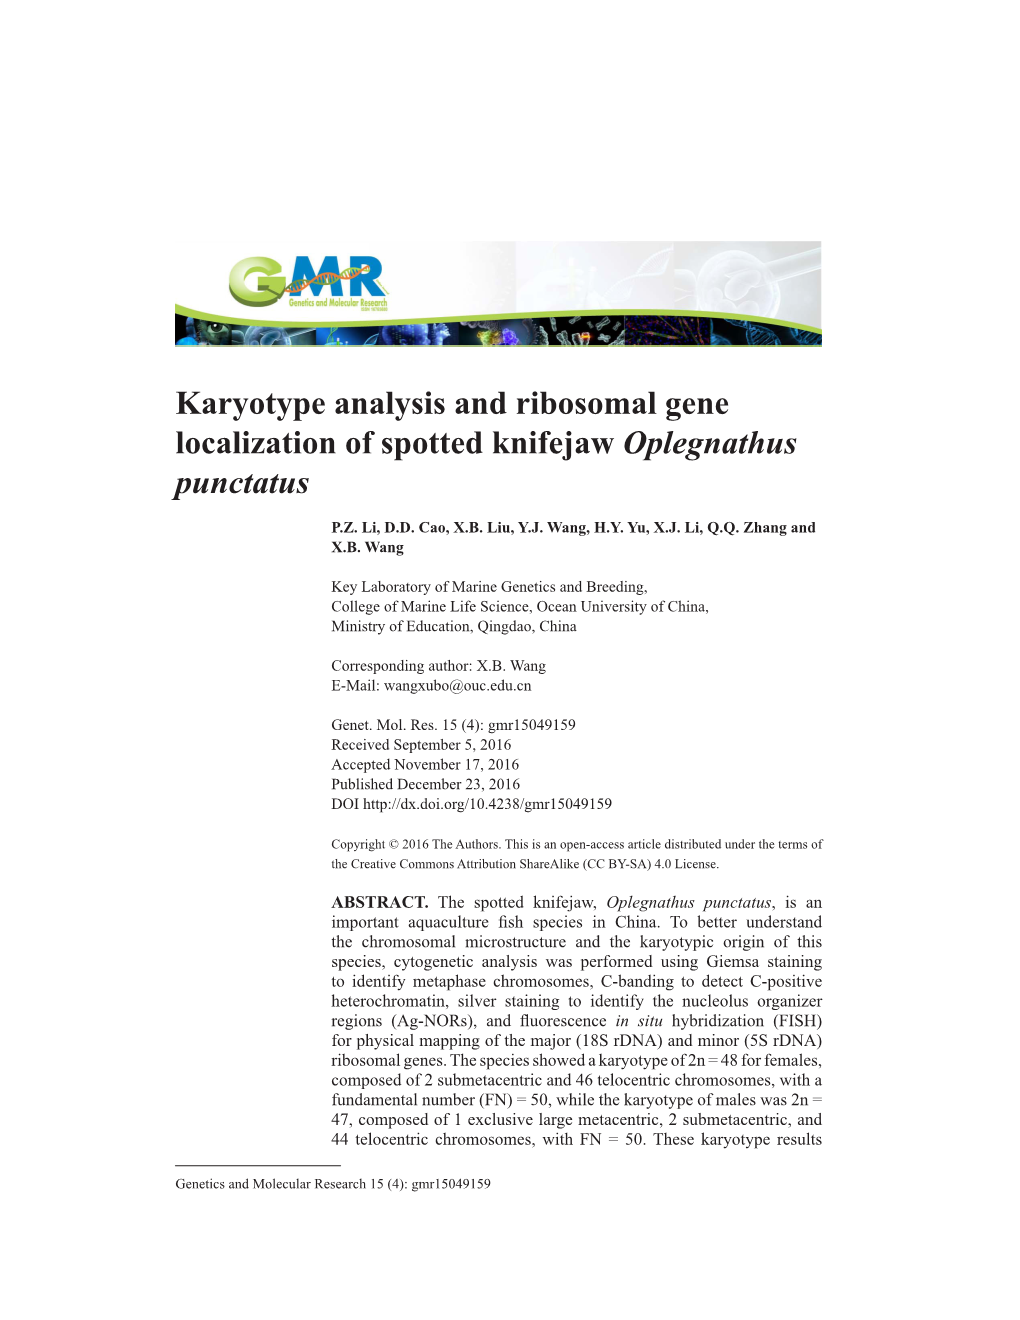 Karyotype Analysis and Ribosomal Gene Localization of Spotted Knifejaw Oplegnathus Punctatus